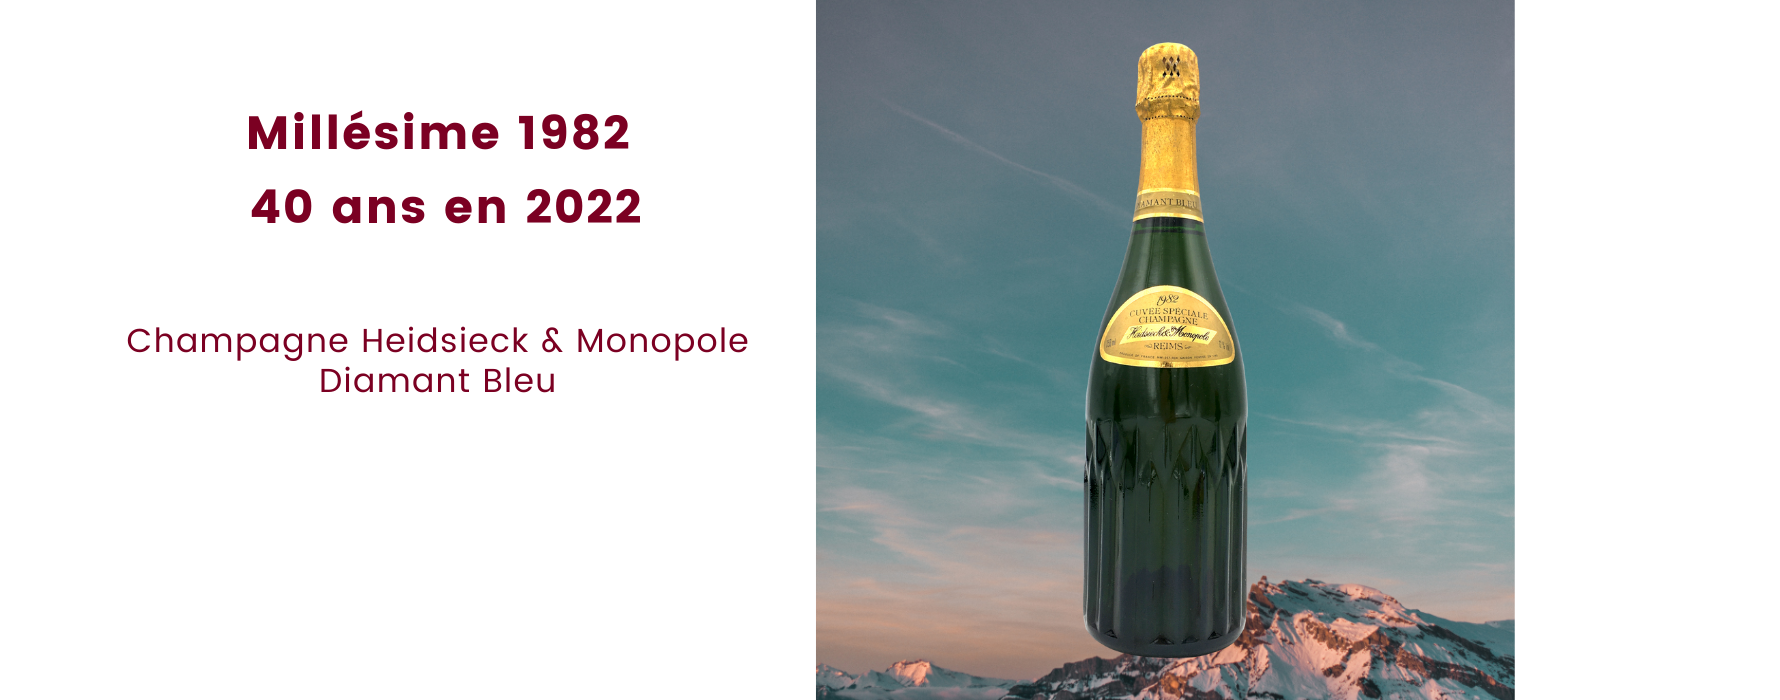 Champagne Heidsieck & Monopole 